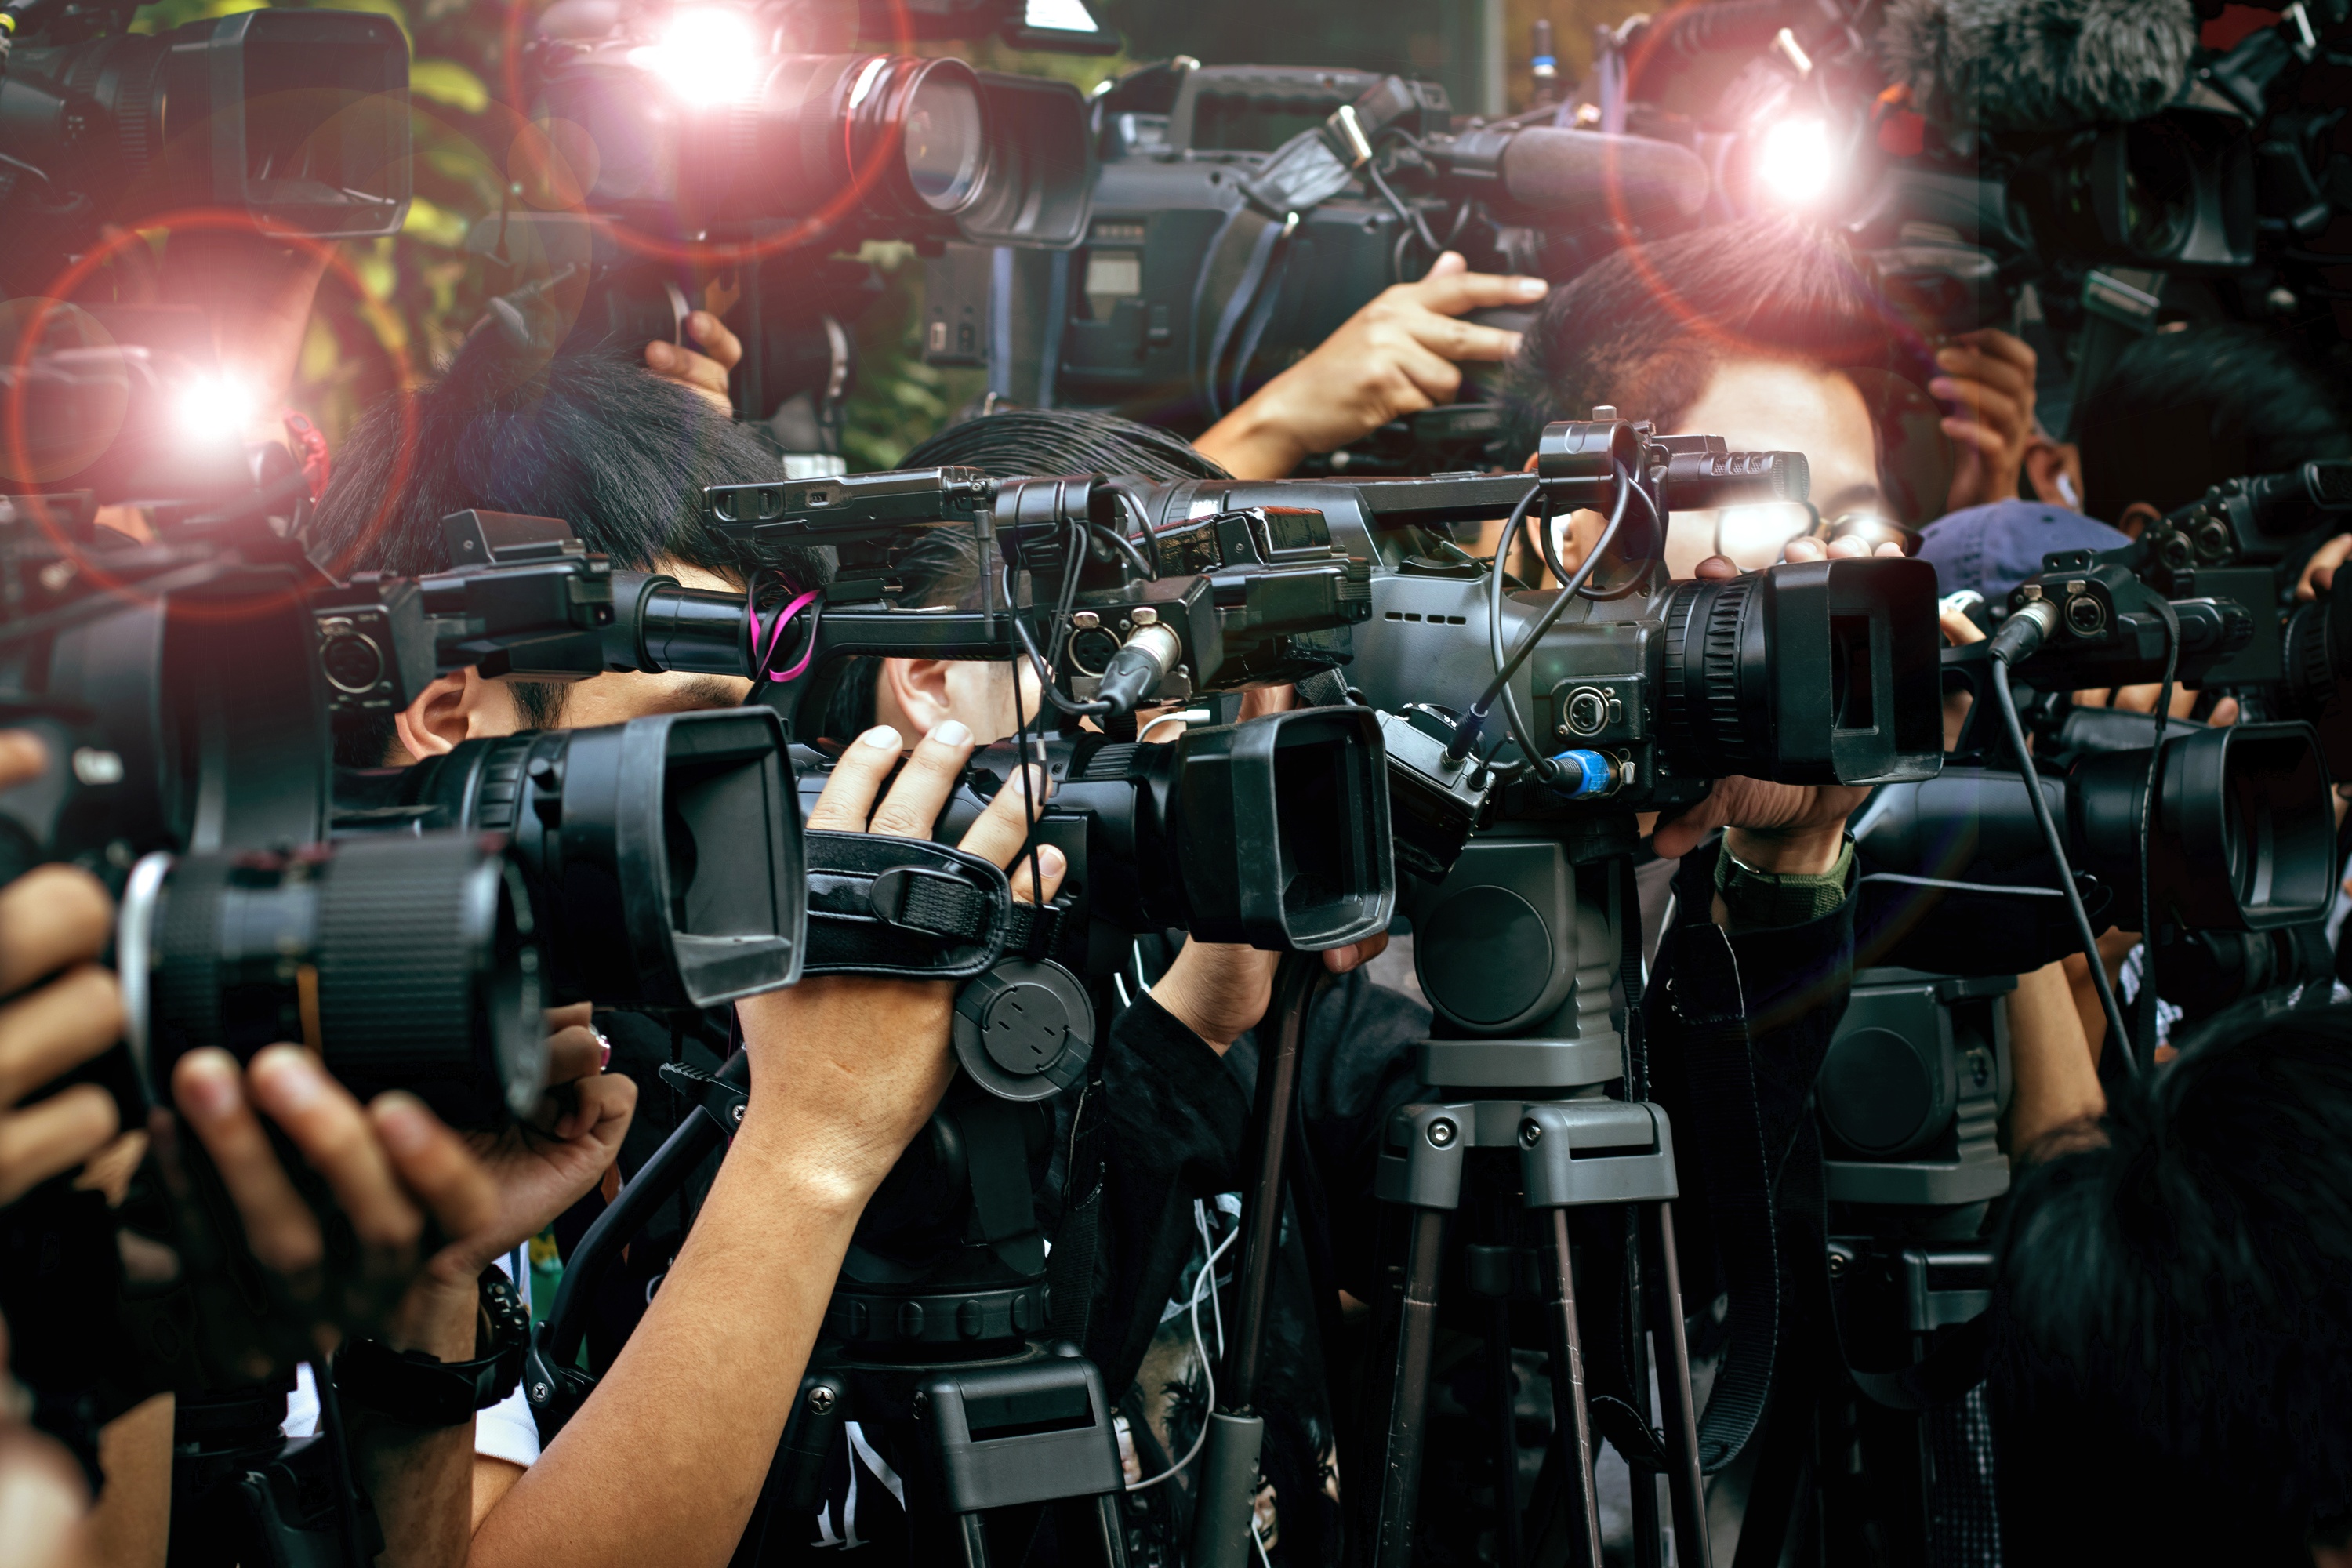 The Impact of Digital Journalism on Mainstream Media